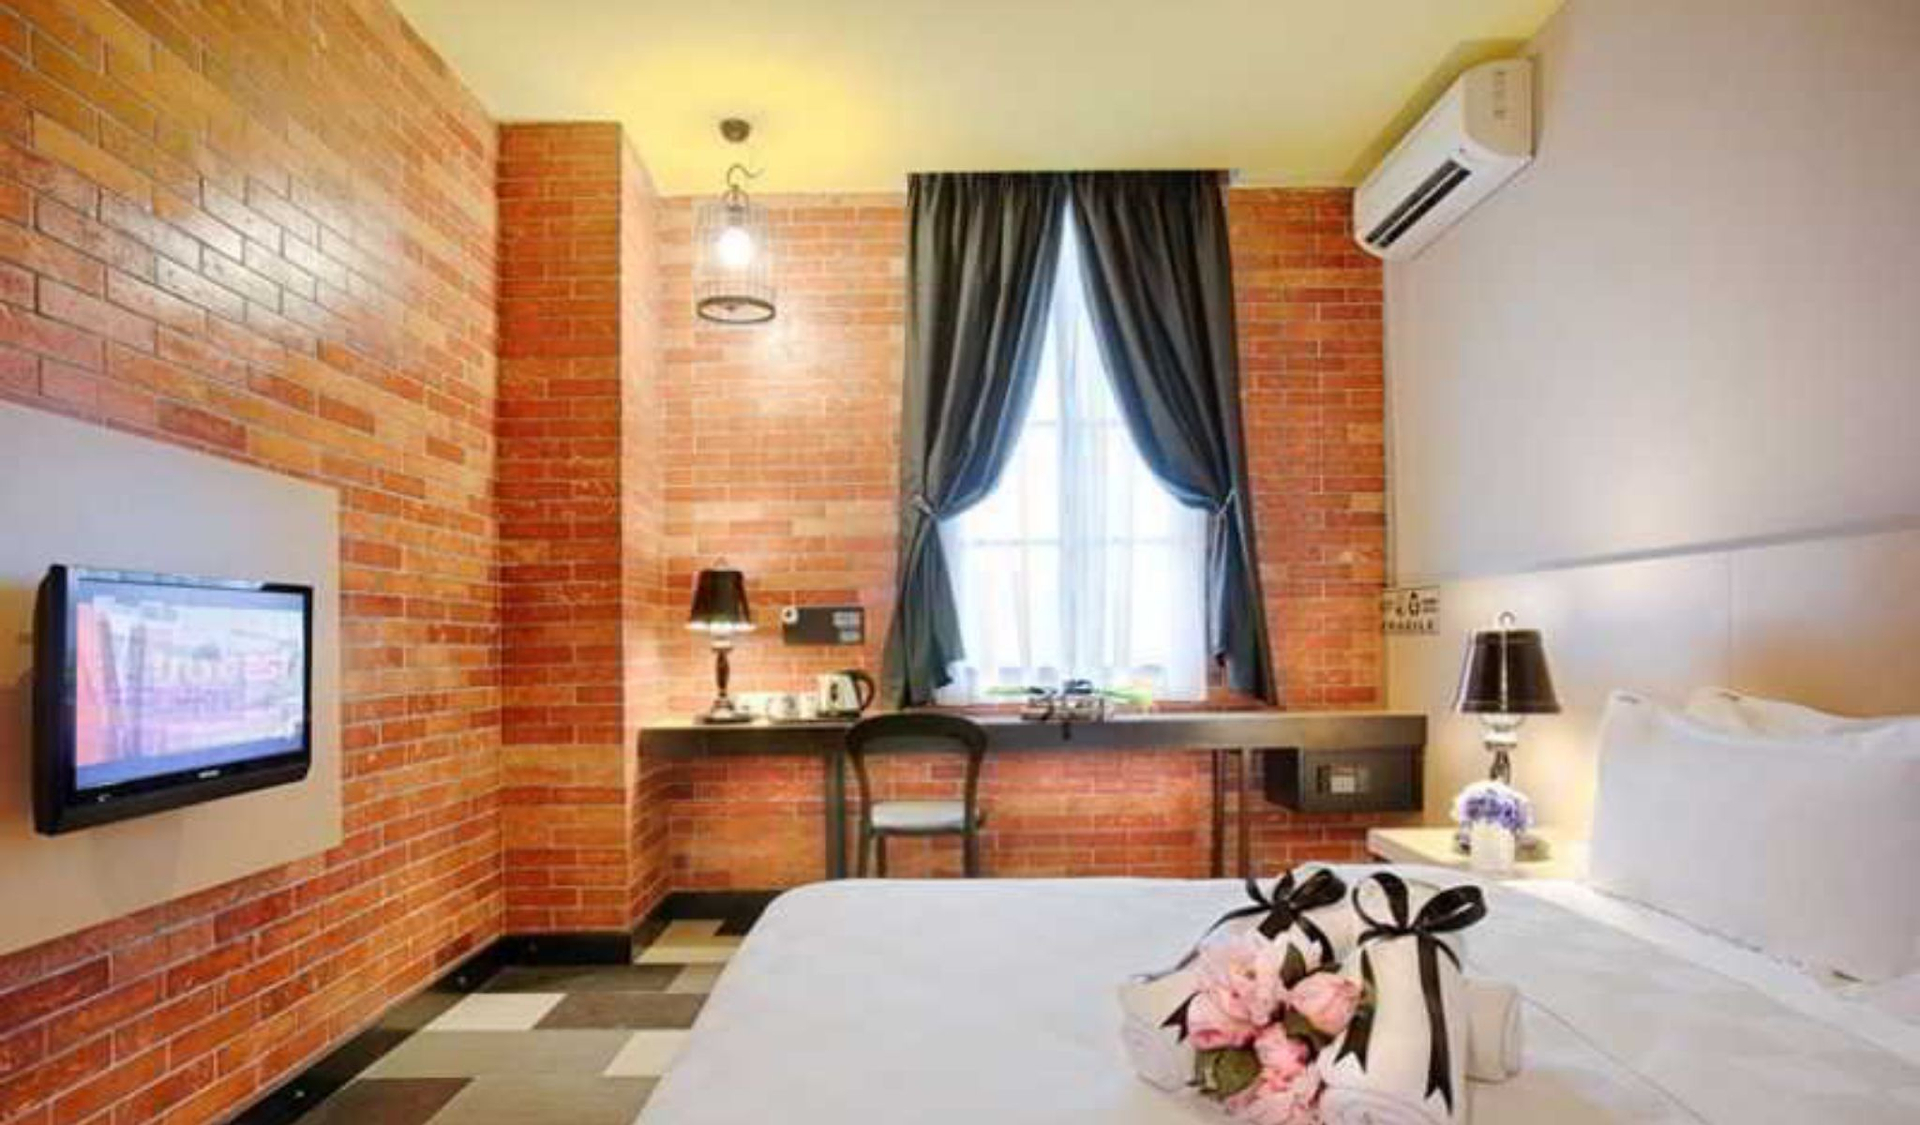 Bedroom 4, The YouniQ Hotel, Kuala Lumpur